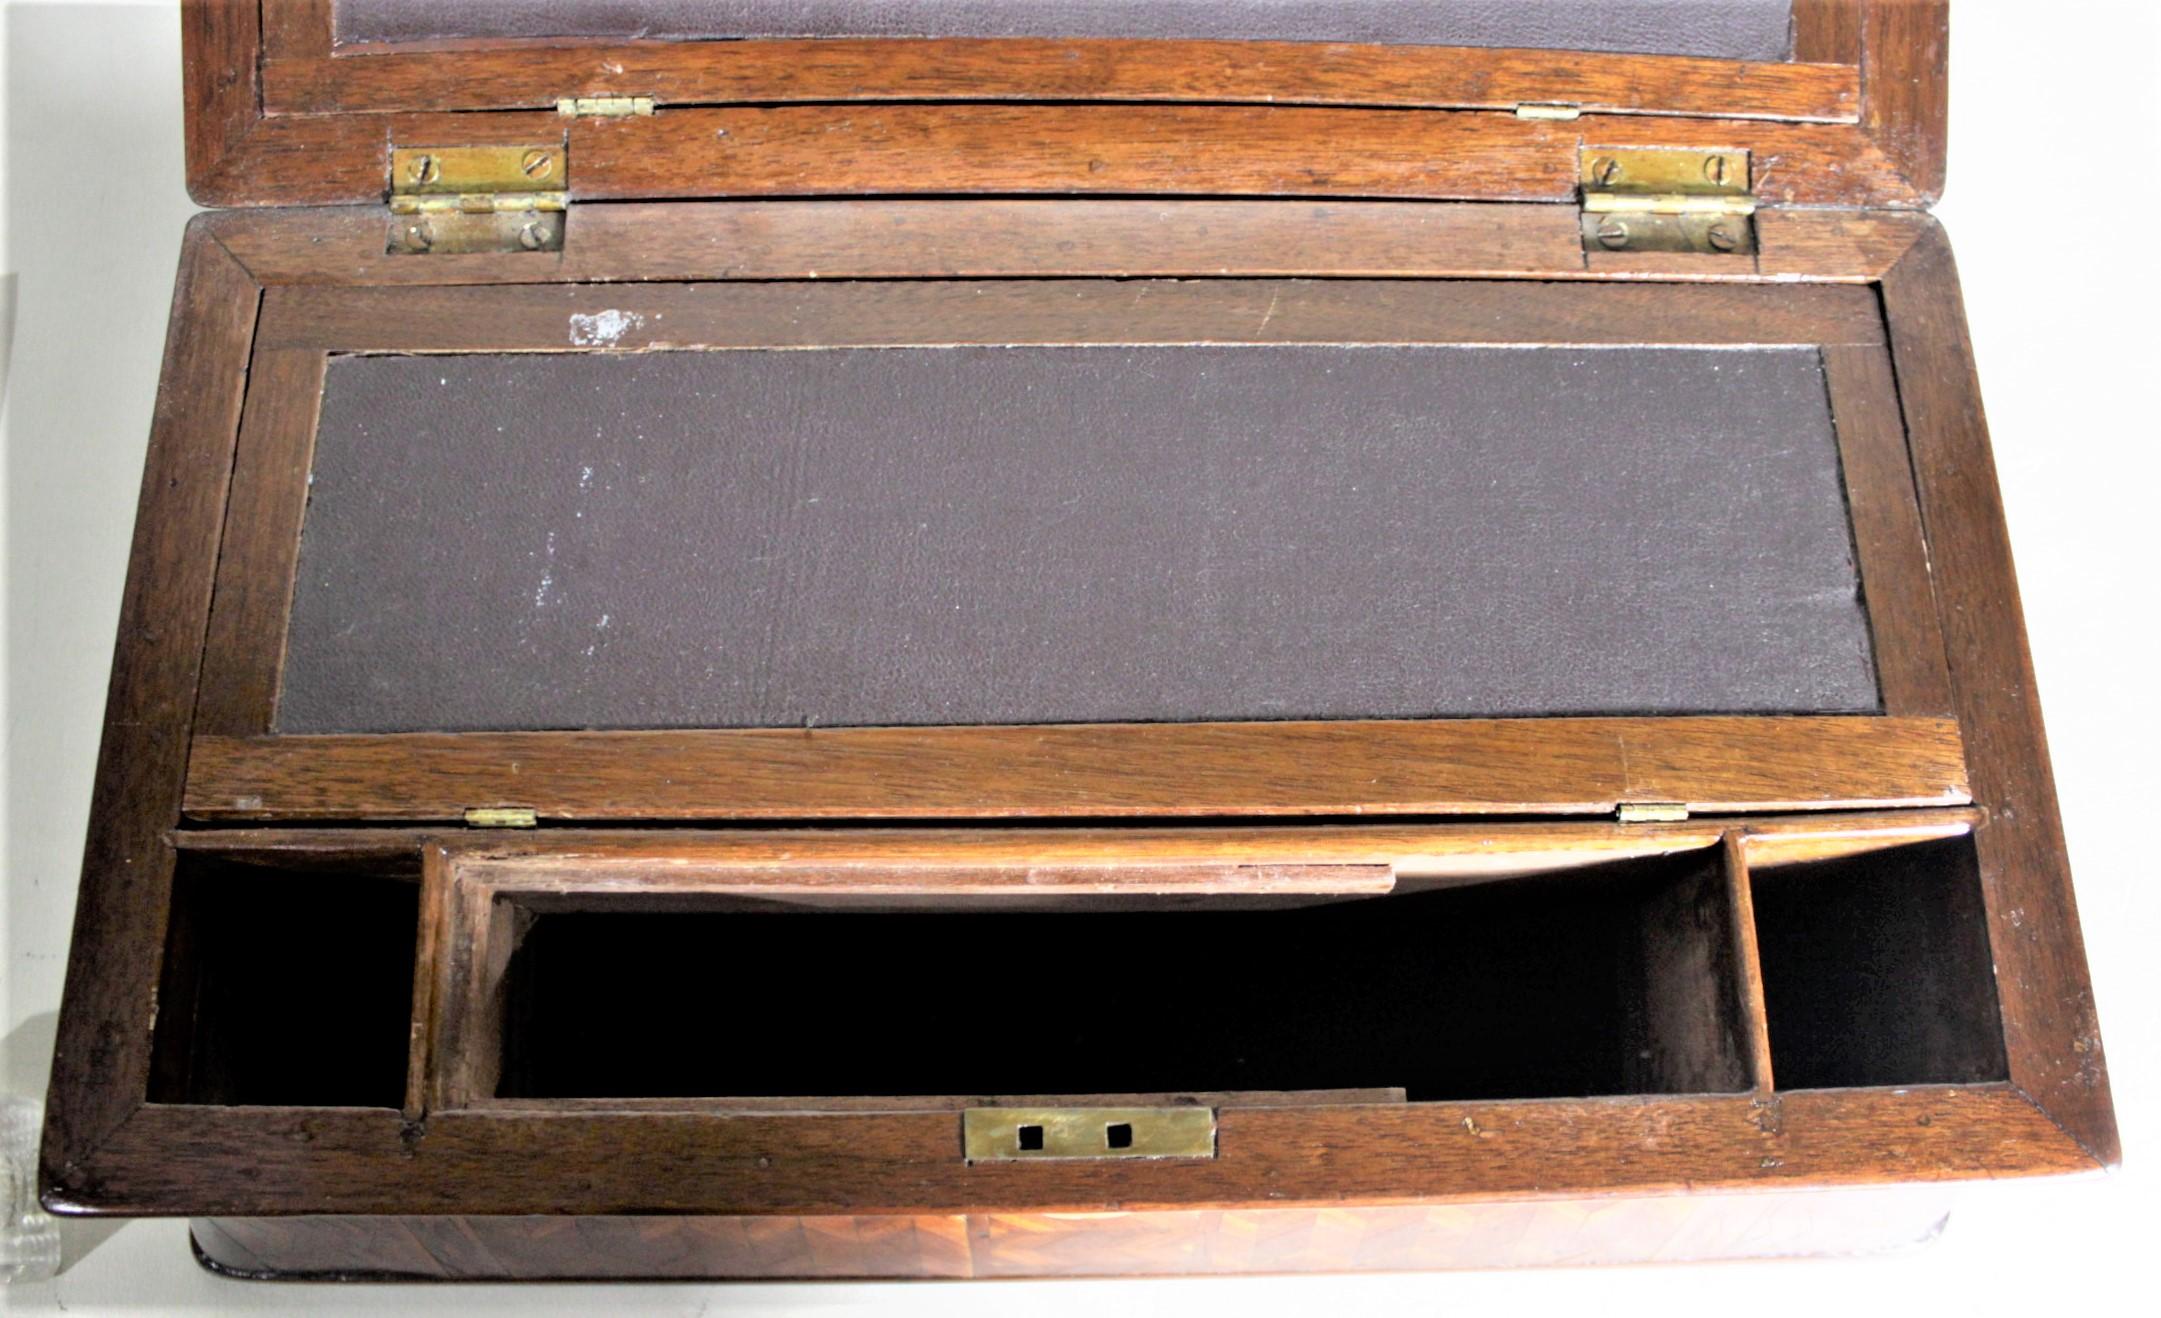 Superb Antique Folk Art Parquetry Casket Styled Writing Box or Lap Desk For Sale 7